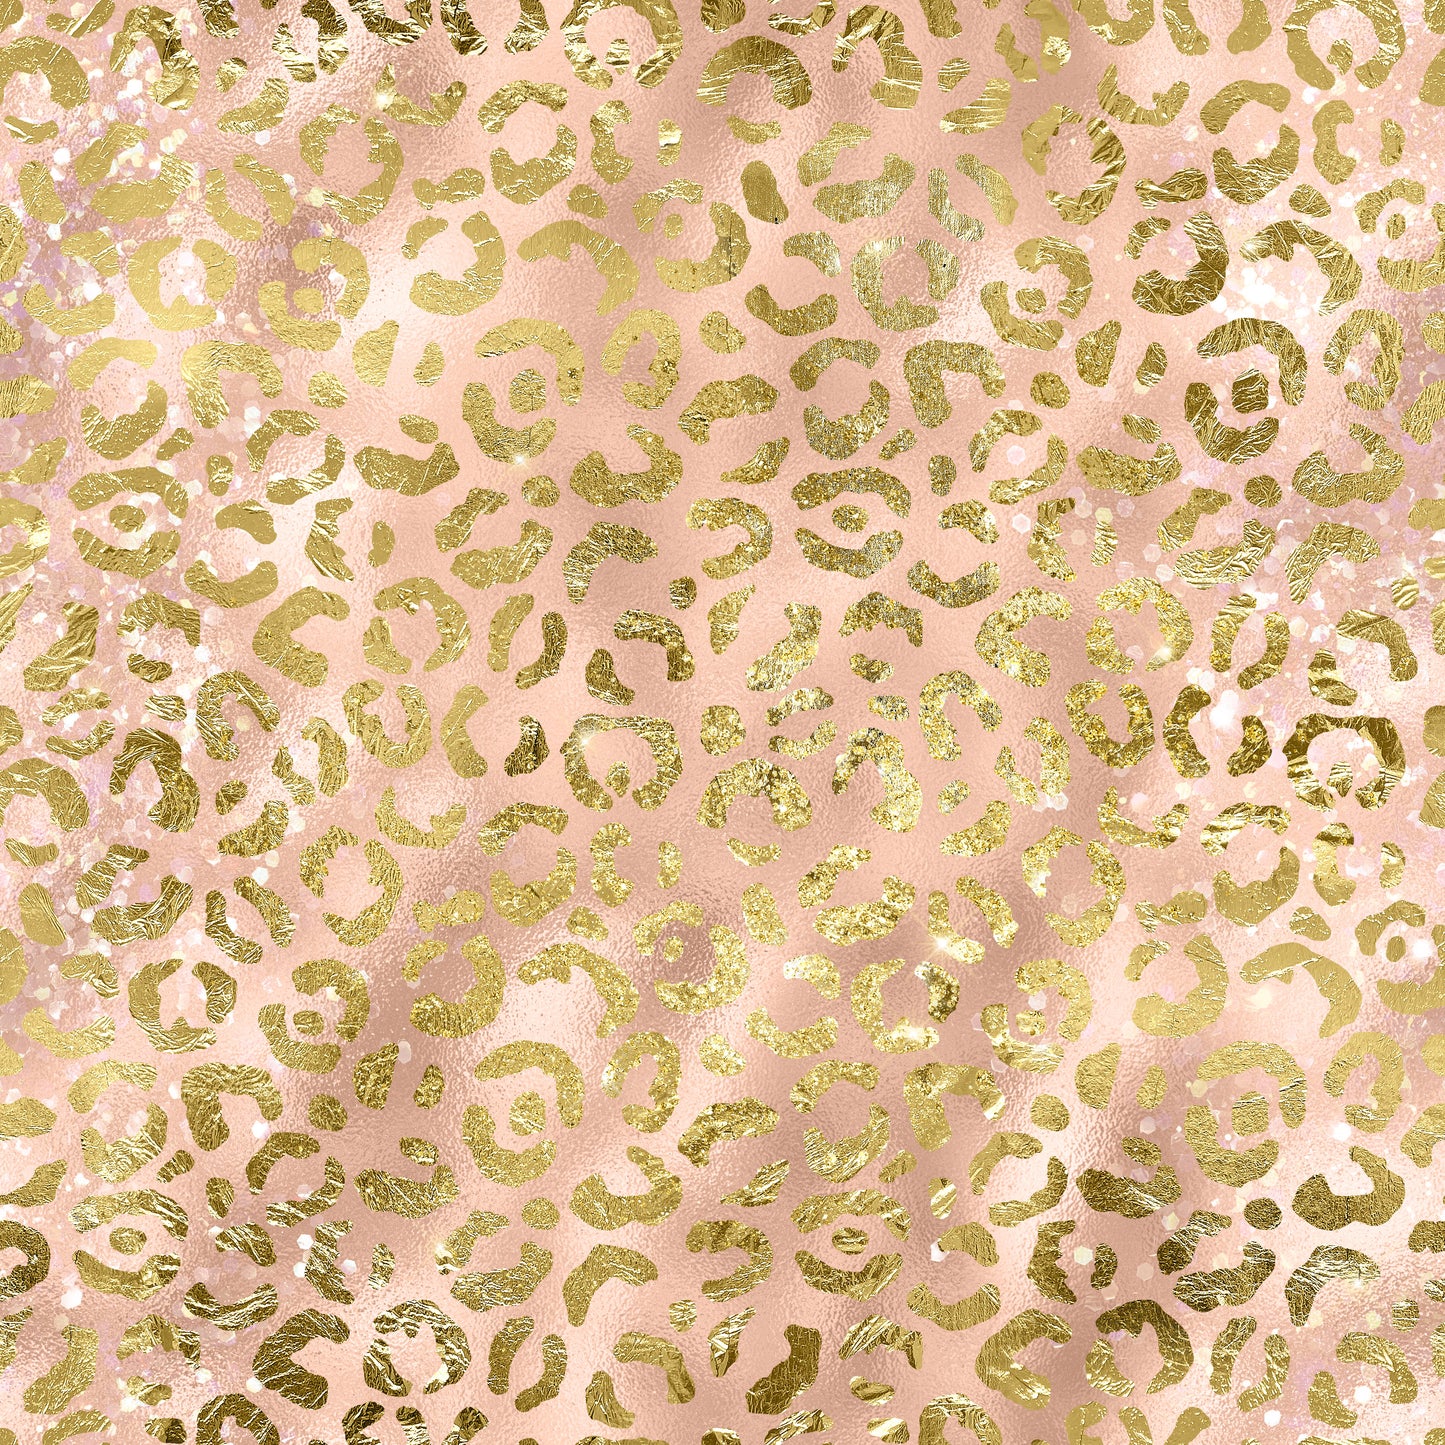 Glam It up Rose Gold Leopard -12x12 Adhesive Vinyl